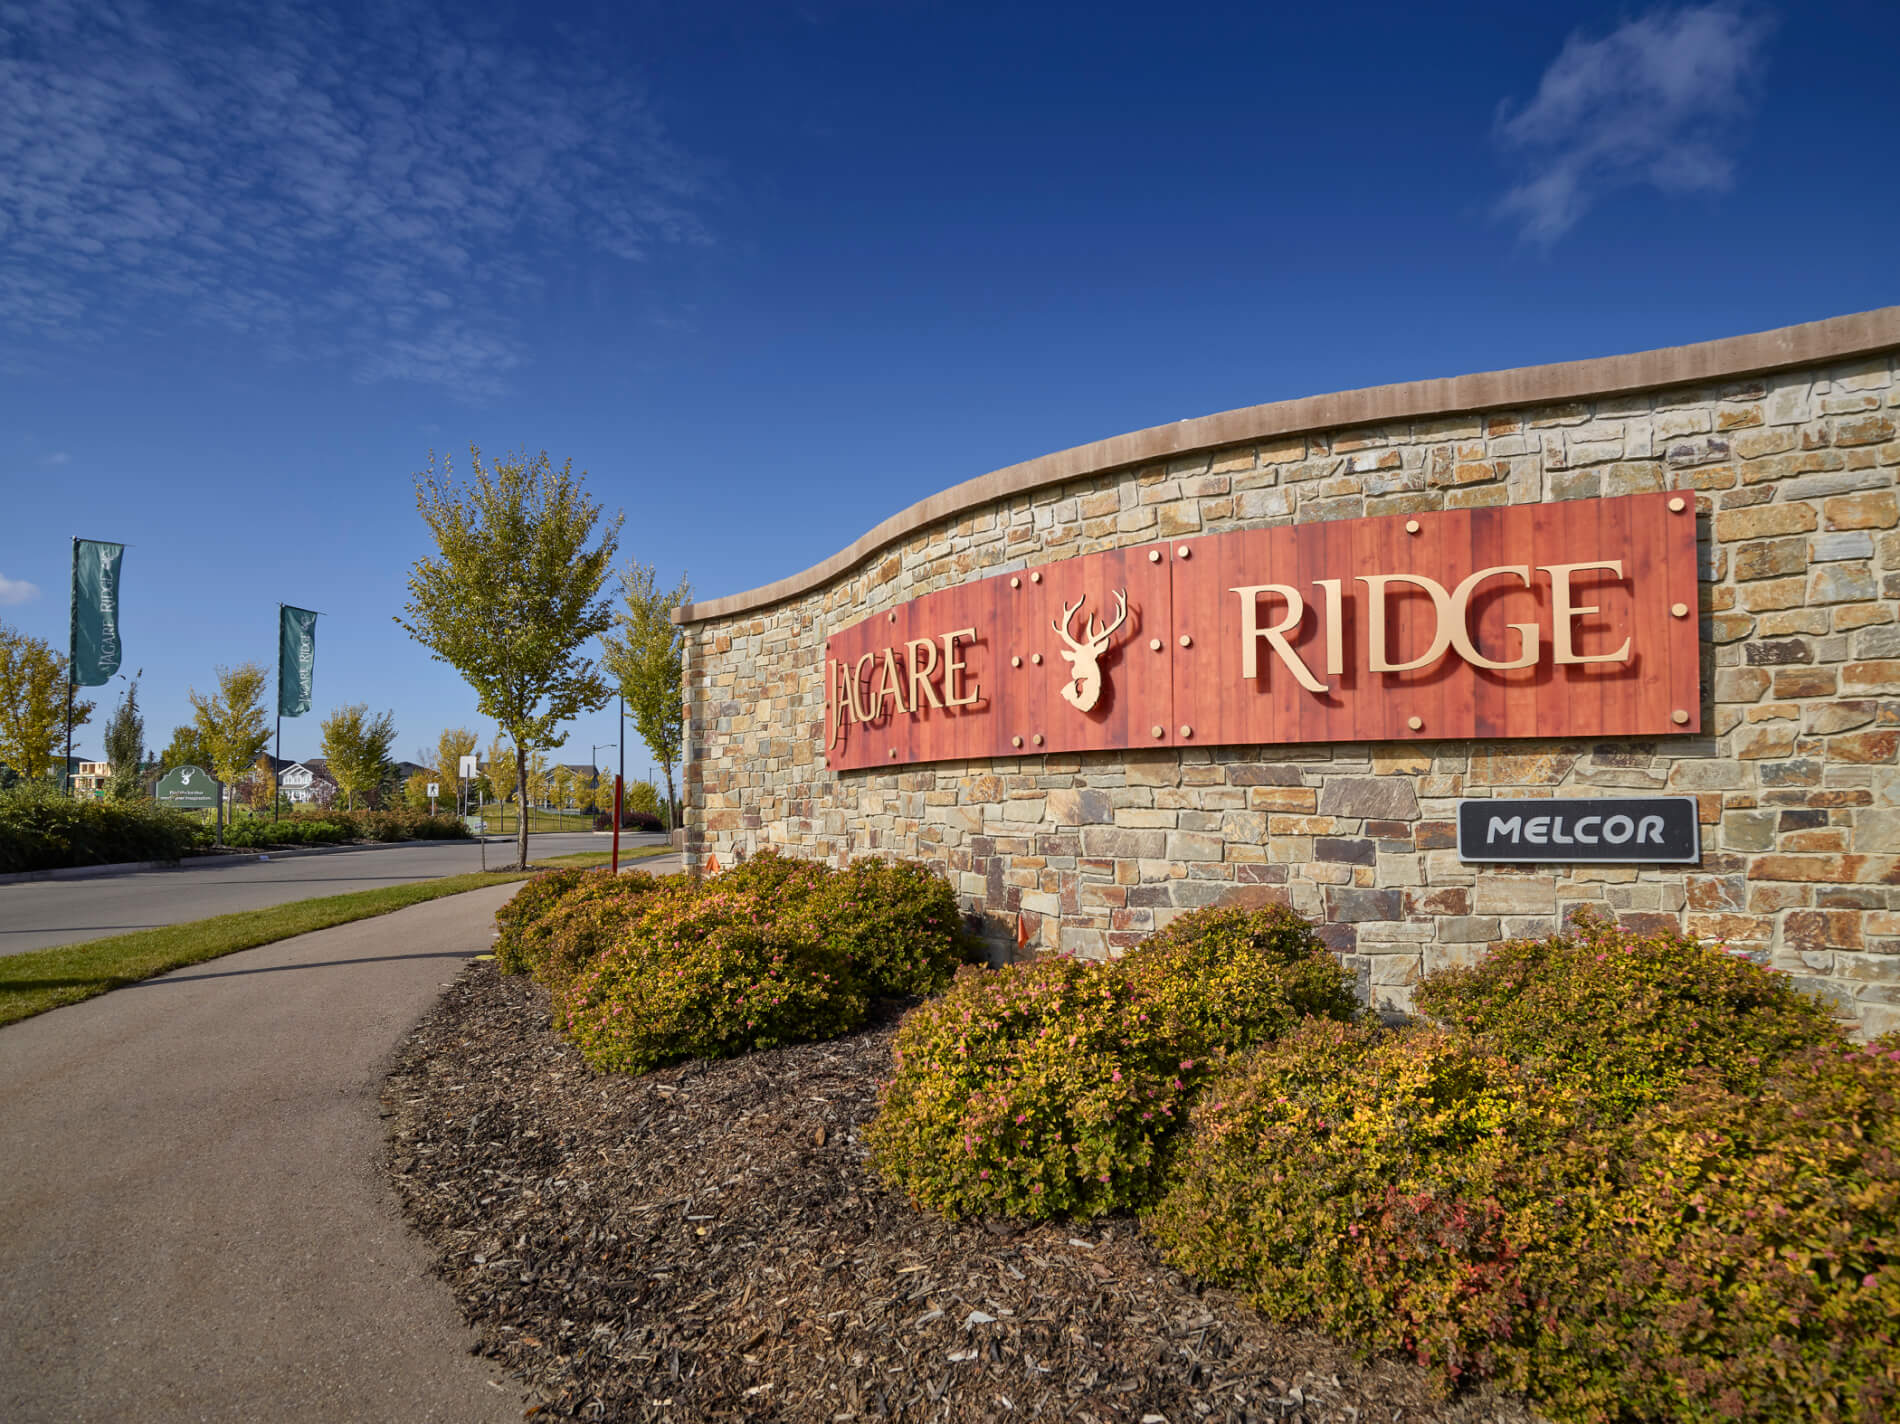 Jagare Ridge Entrance Sign